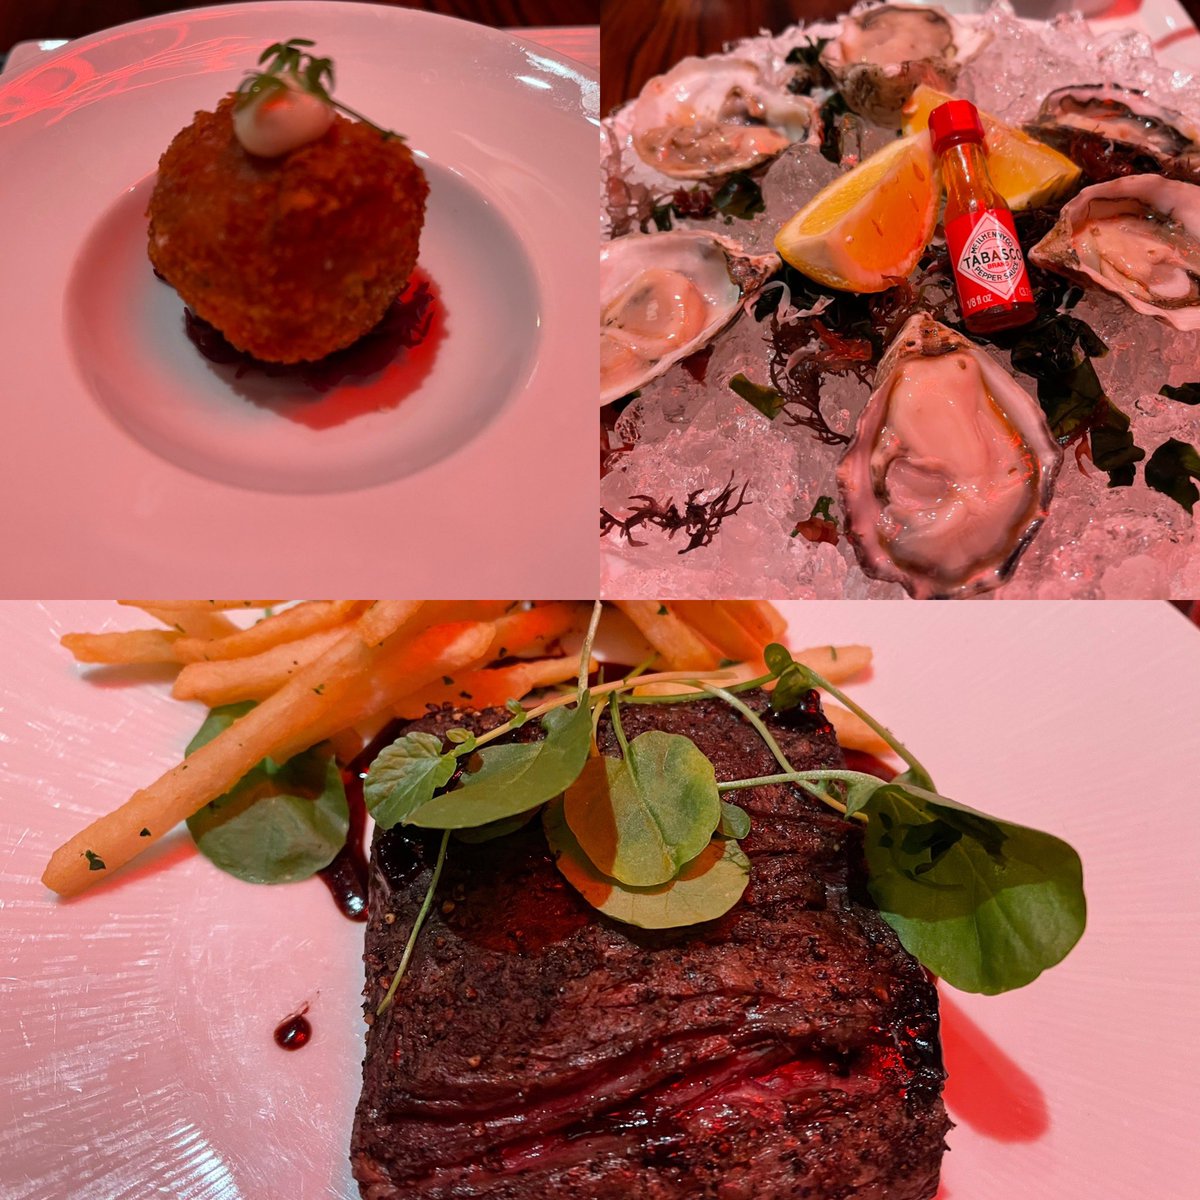 Wonderful dining experience at Gordon Ramsay Steak—Scottish egg, oysters, Wagyu rib cap with truffle fries. https://t.co/XorfWU0Oyd